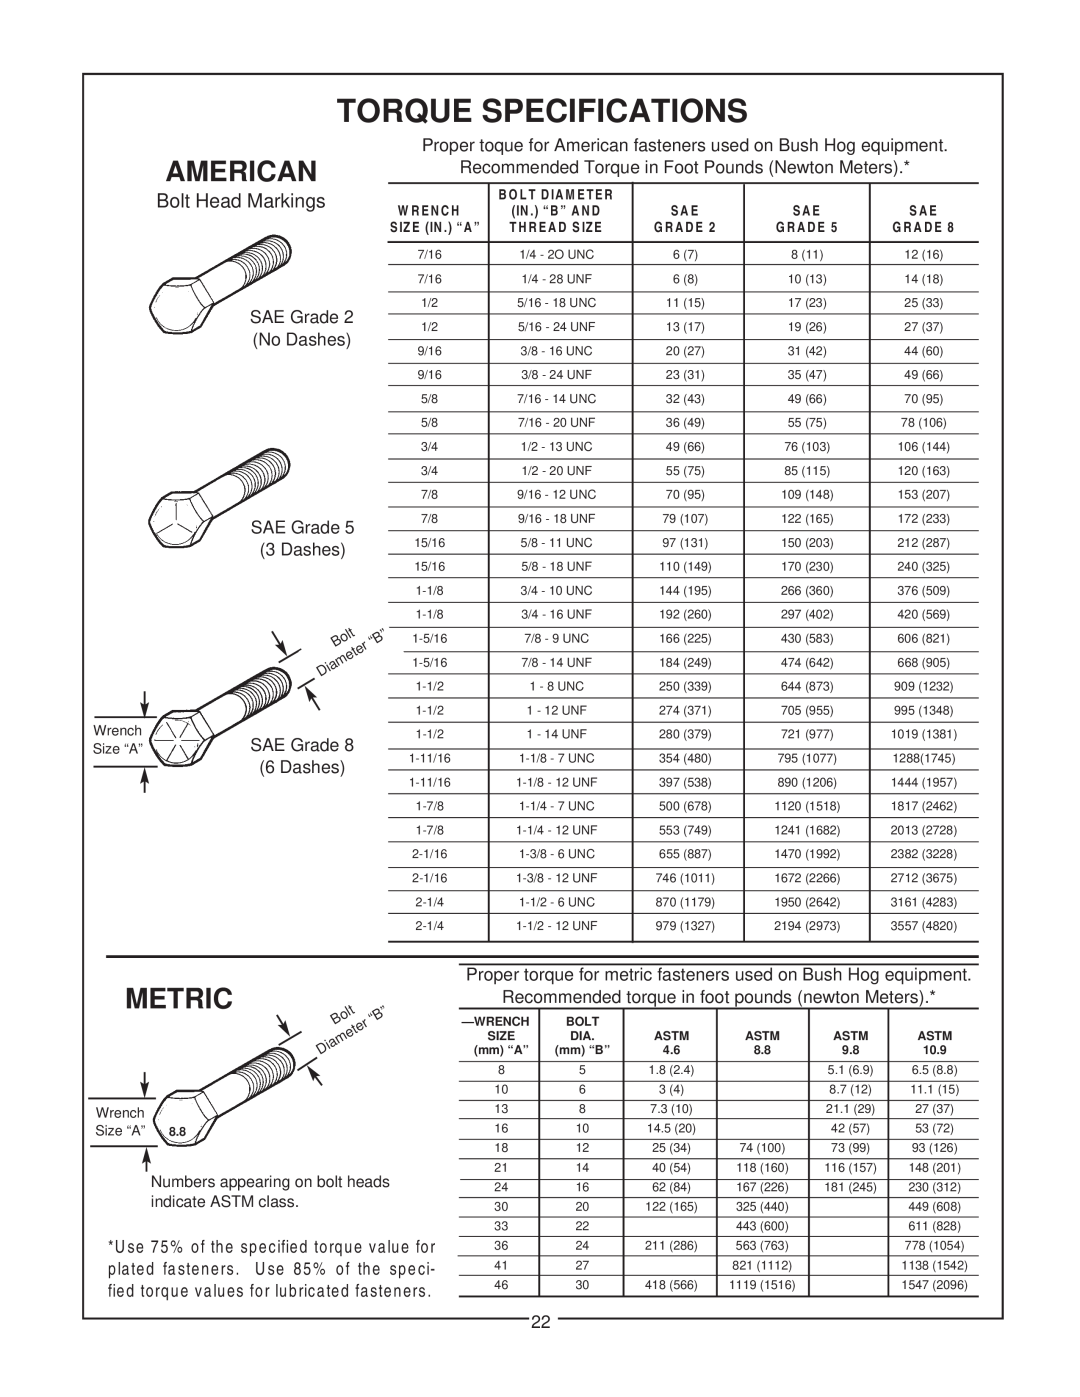 Bush Hog SM 60 Torque Specifications, American, Metric, Bolt Head Markings, W R E N C H, S Iz E In . “A ”, Wrench Size “A” 